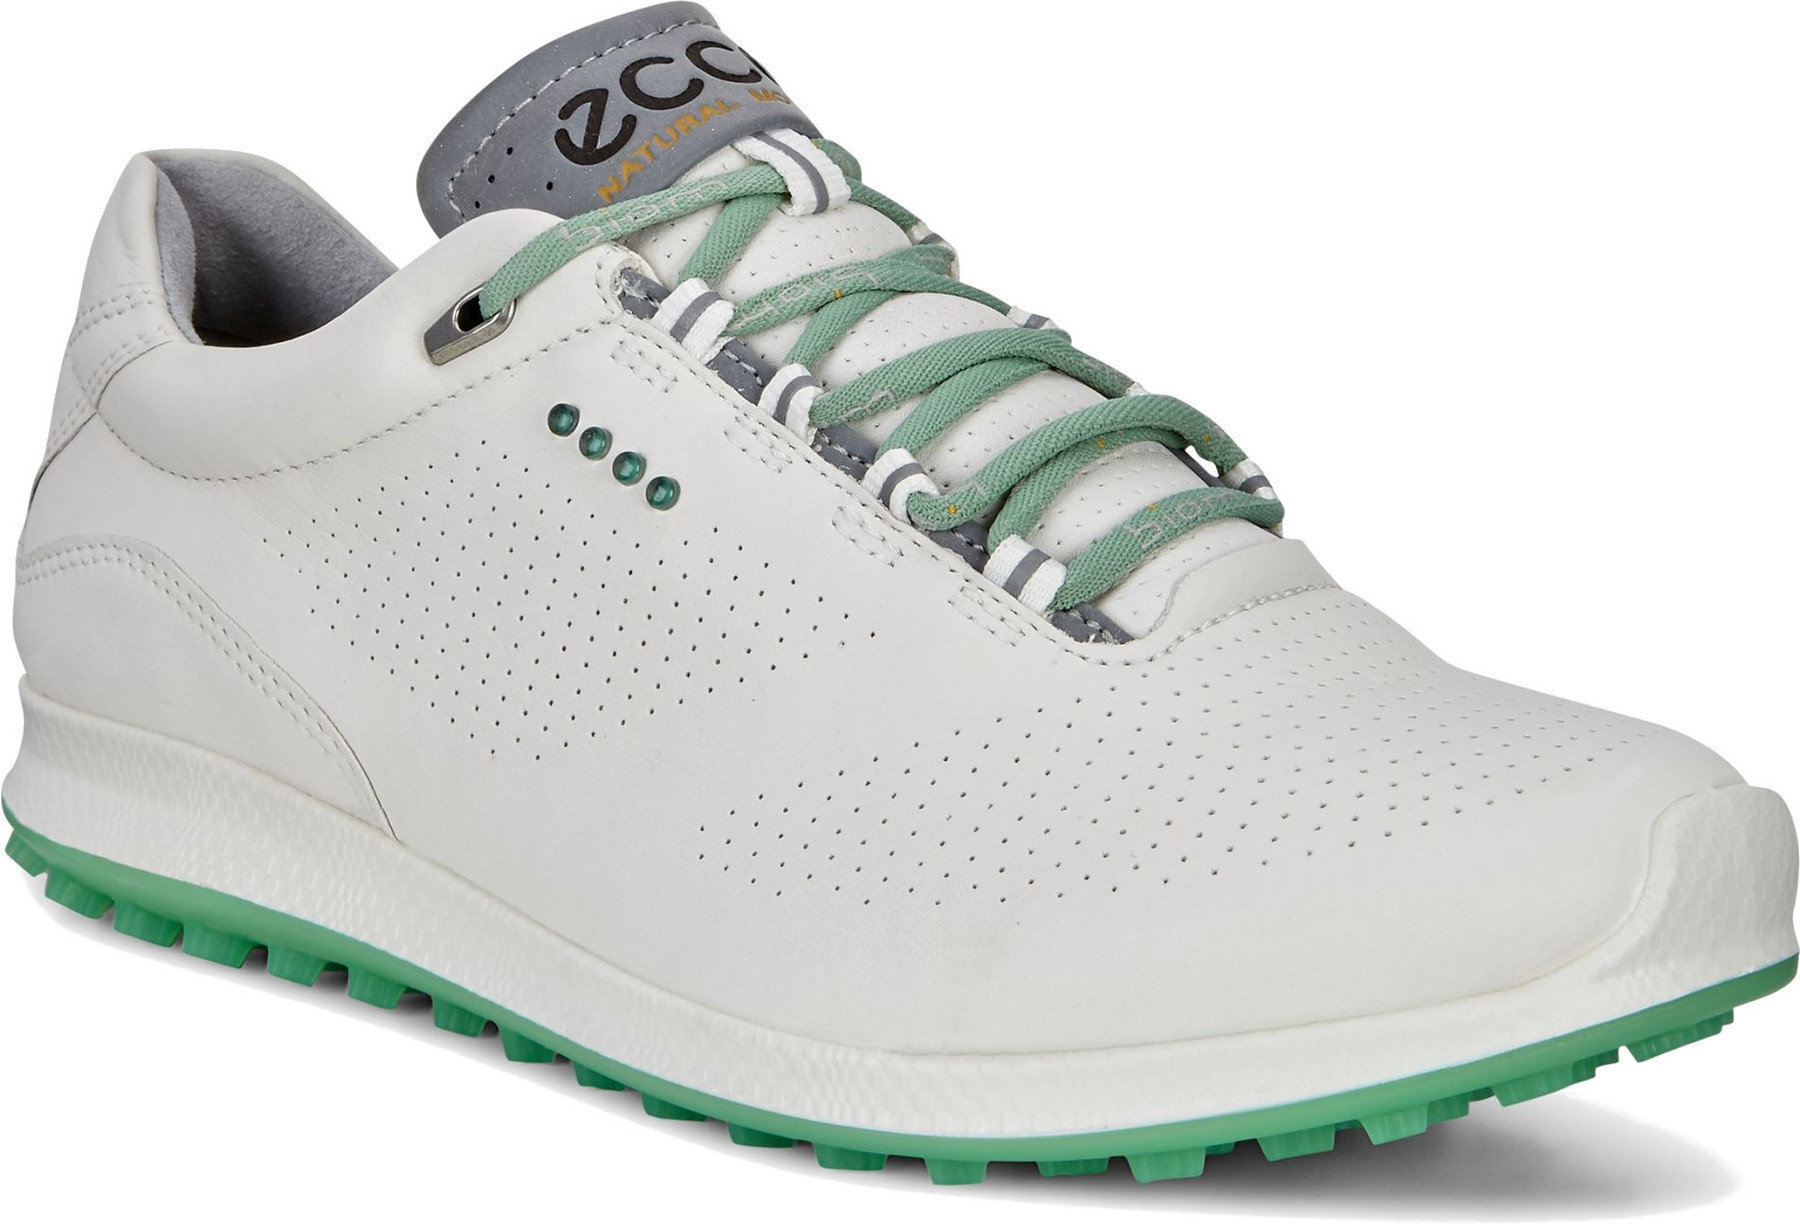 Chaussures de golf pour femmes Ecco Biom Hybrid 2 Chaussures de Golf Femmes White/Granite Green 39